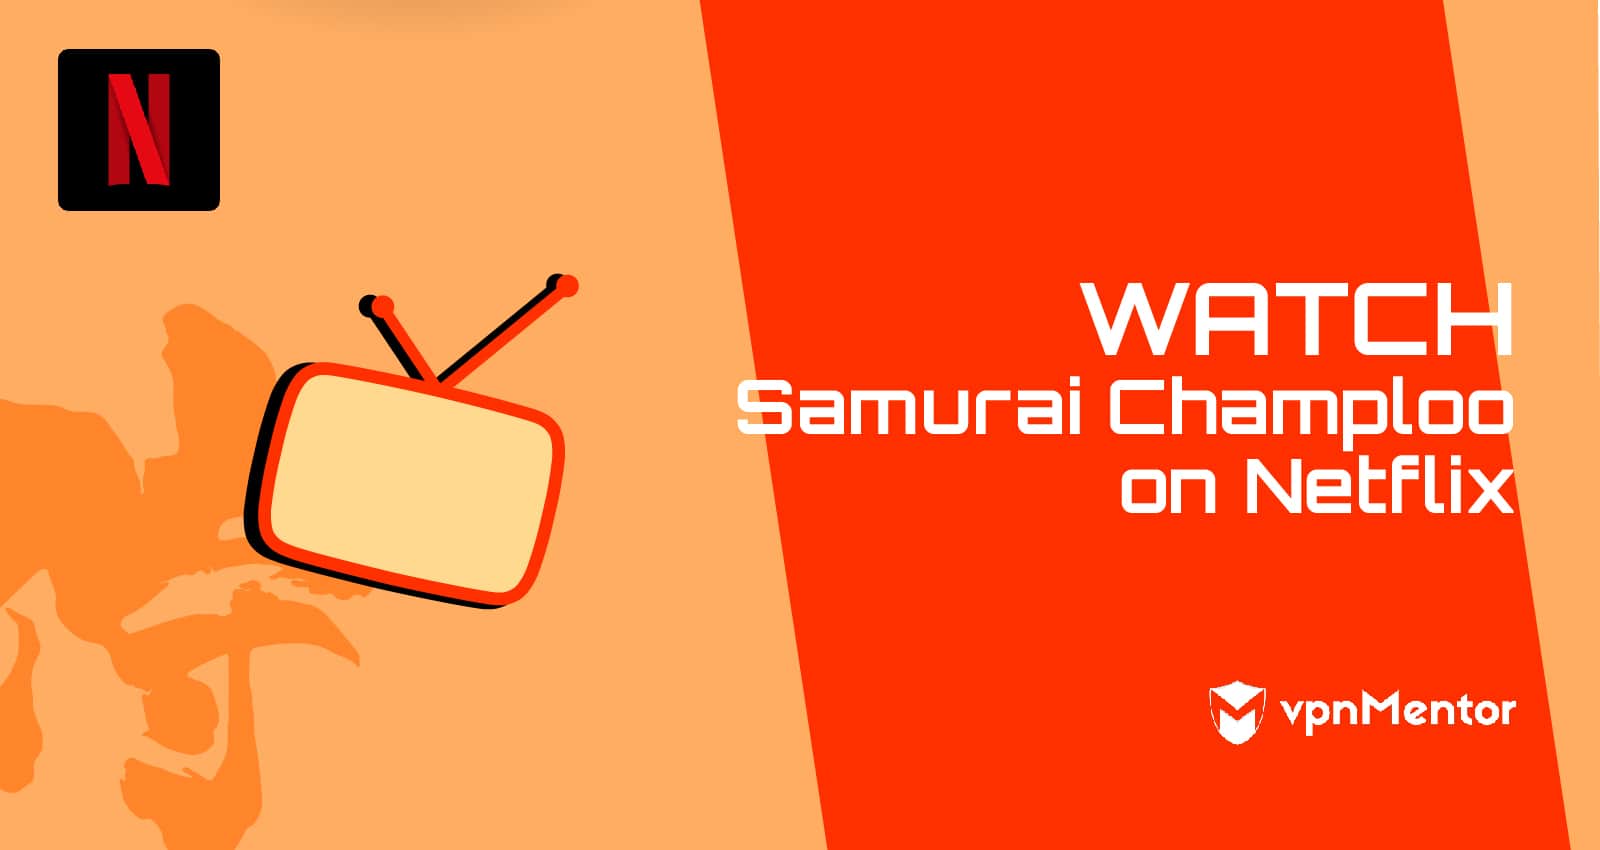 ¡Samurai Champloo está en Netflix! Así puedes verlo en 2022.